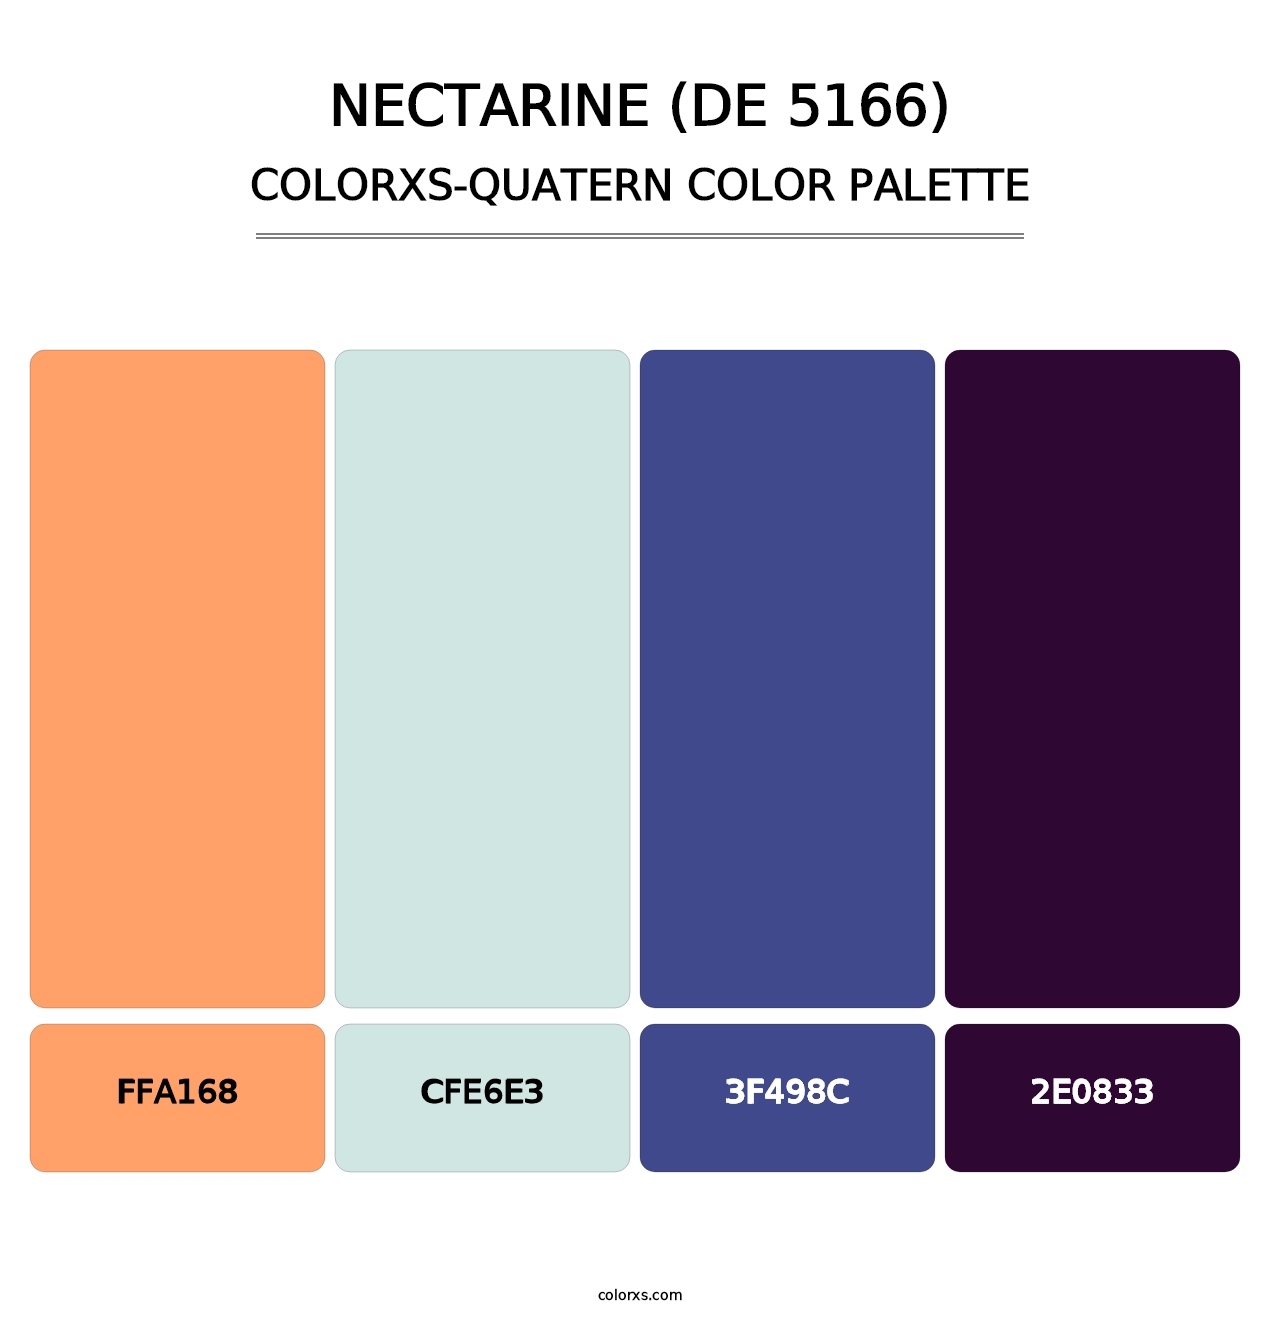 Nectarine (DE 5166) - Colorxs Quatern Palette